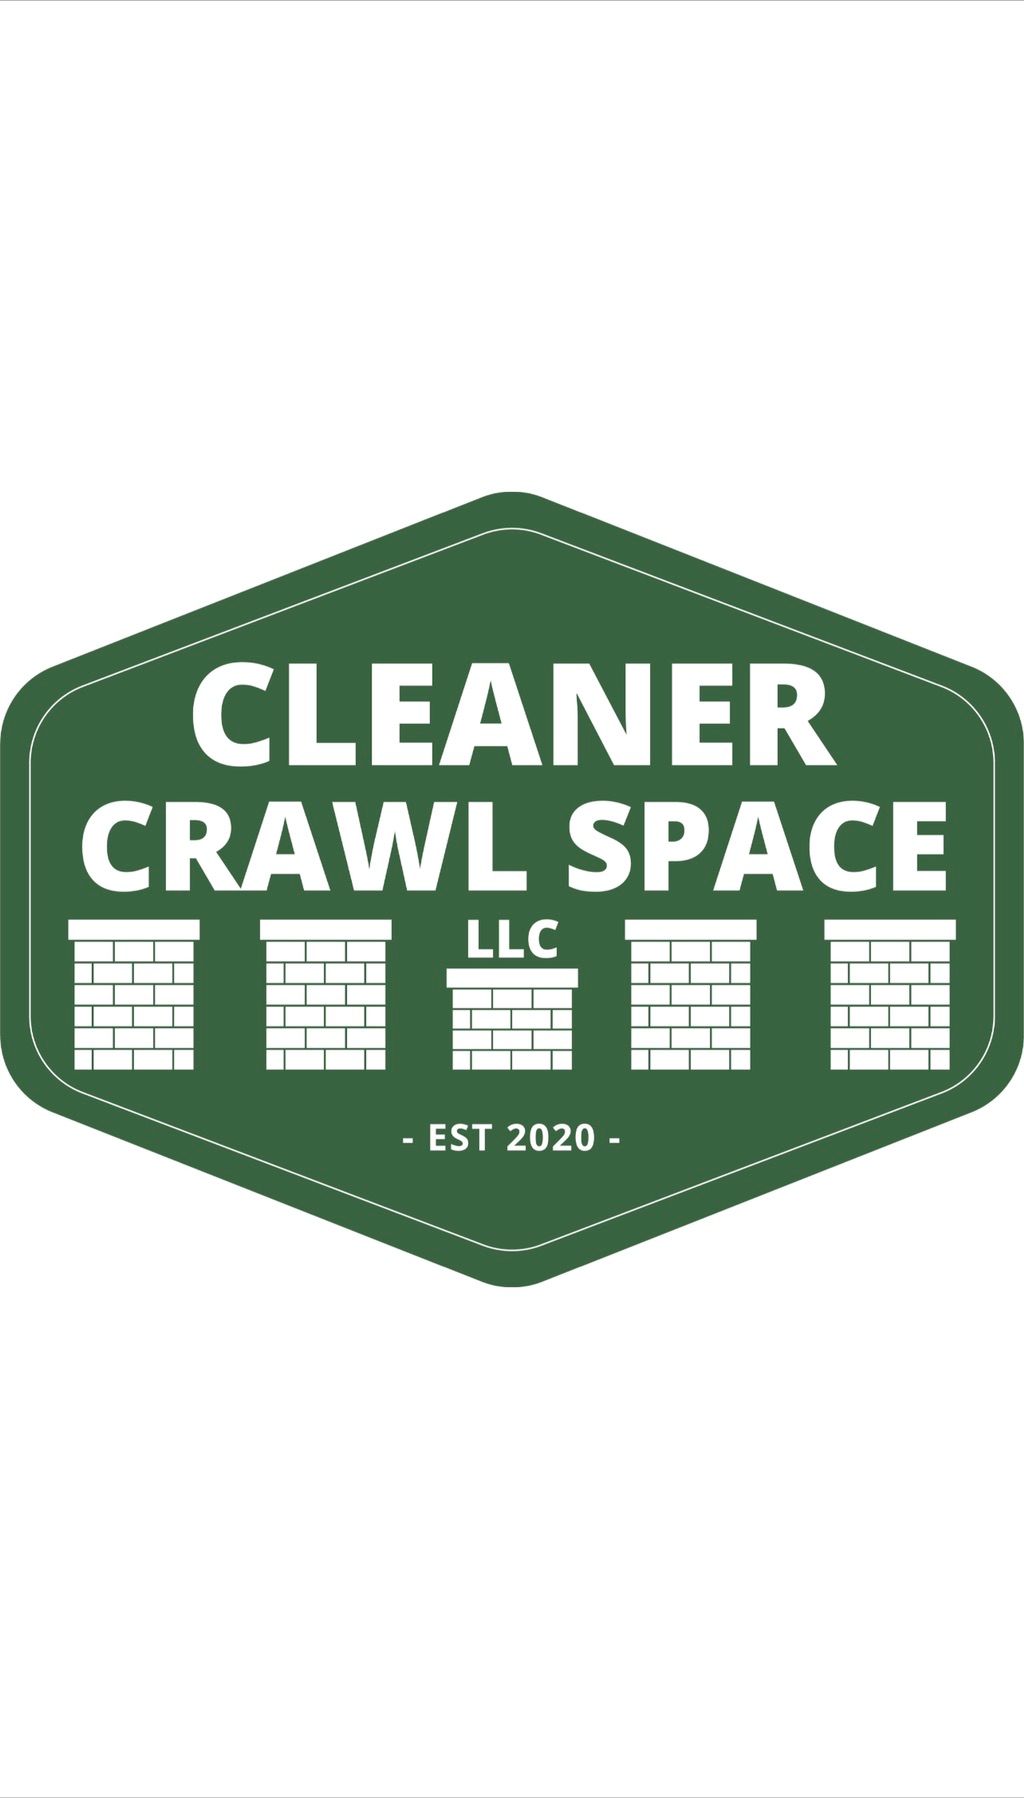 Cleaner Crawl Space, LLC